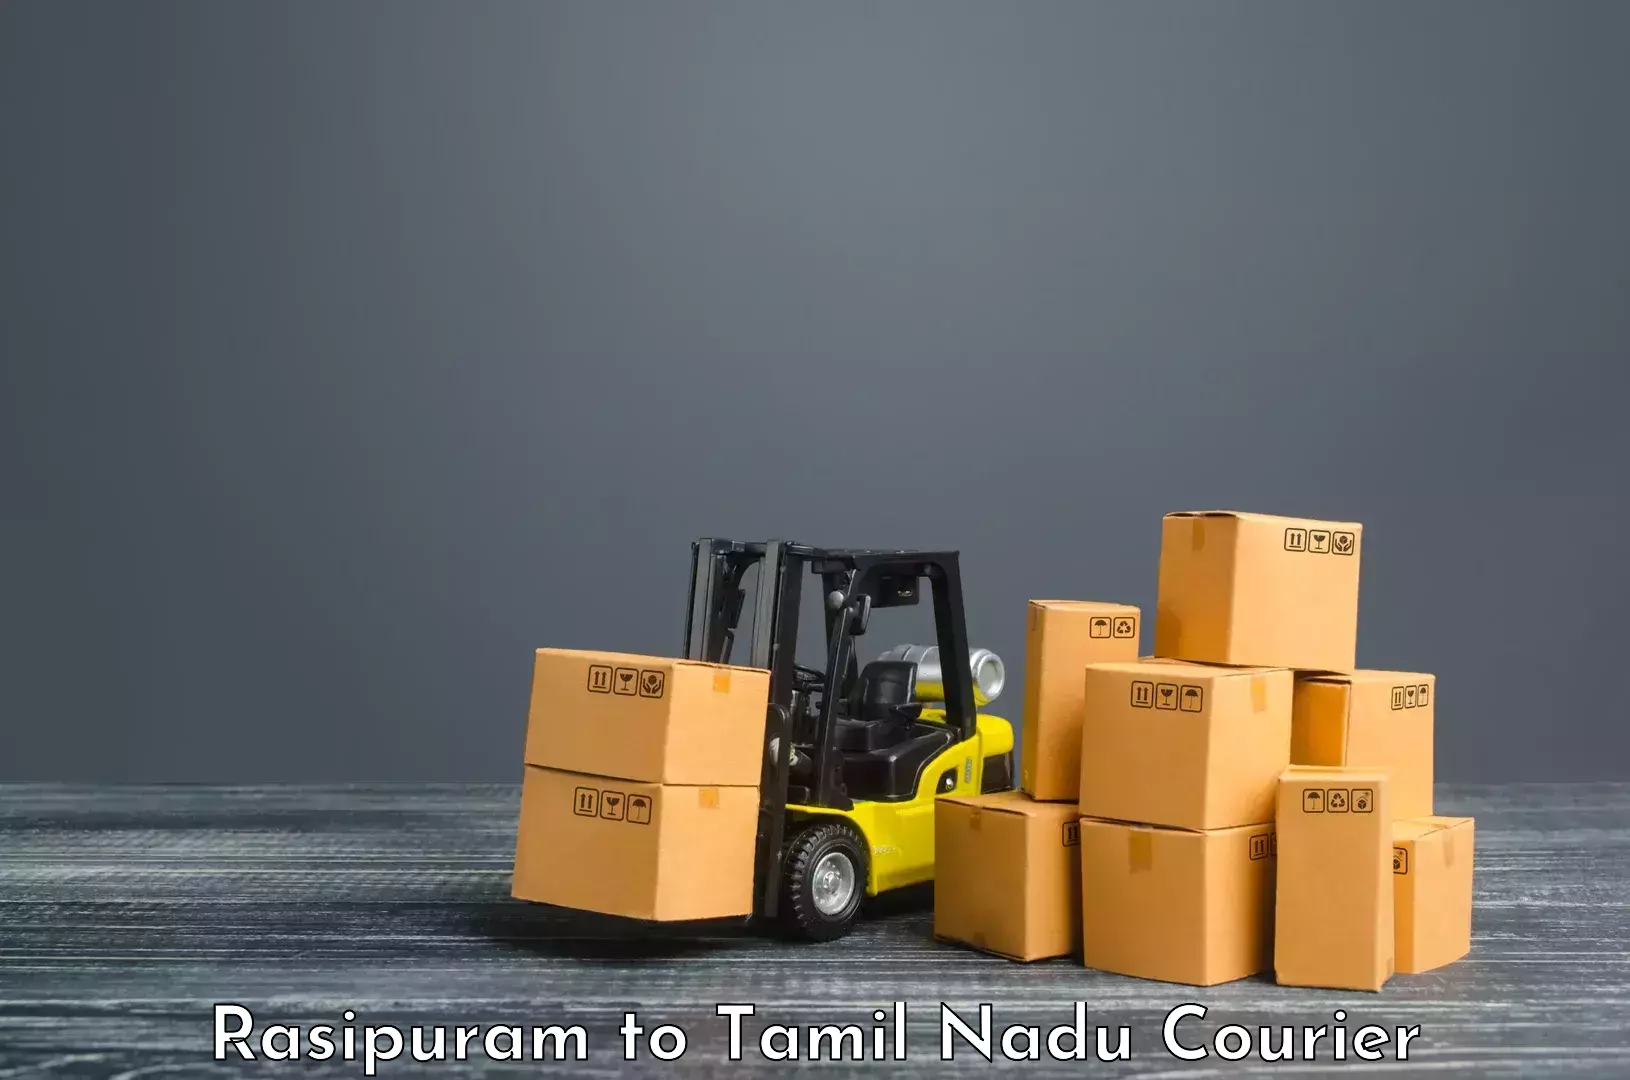 User-friendly delivery service Rasipuram to Tamil Nadu